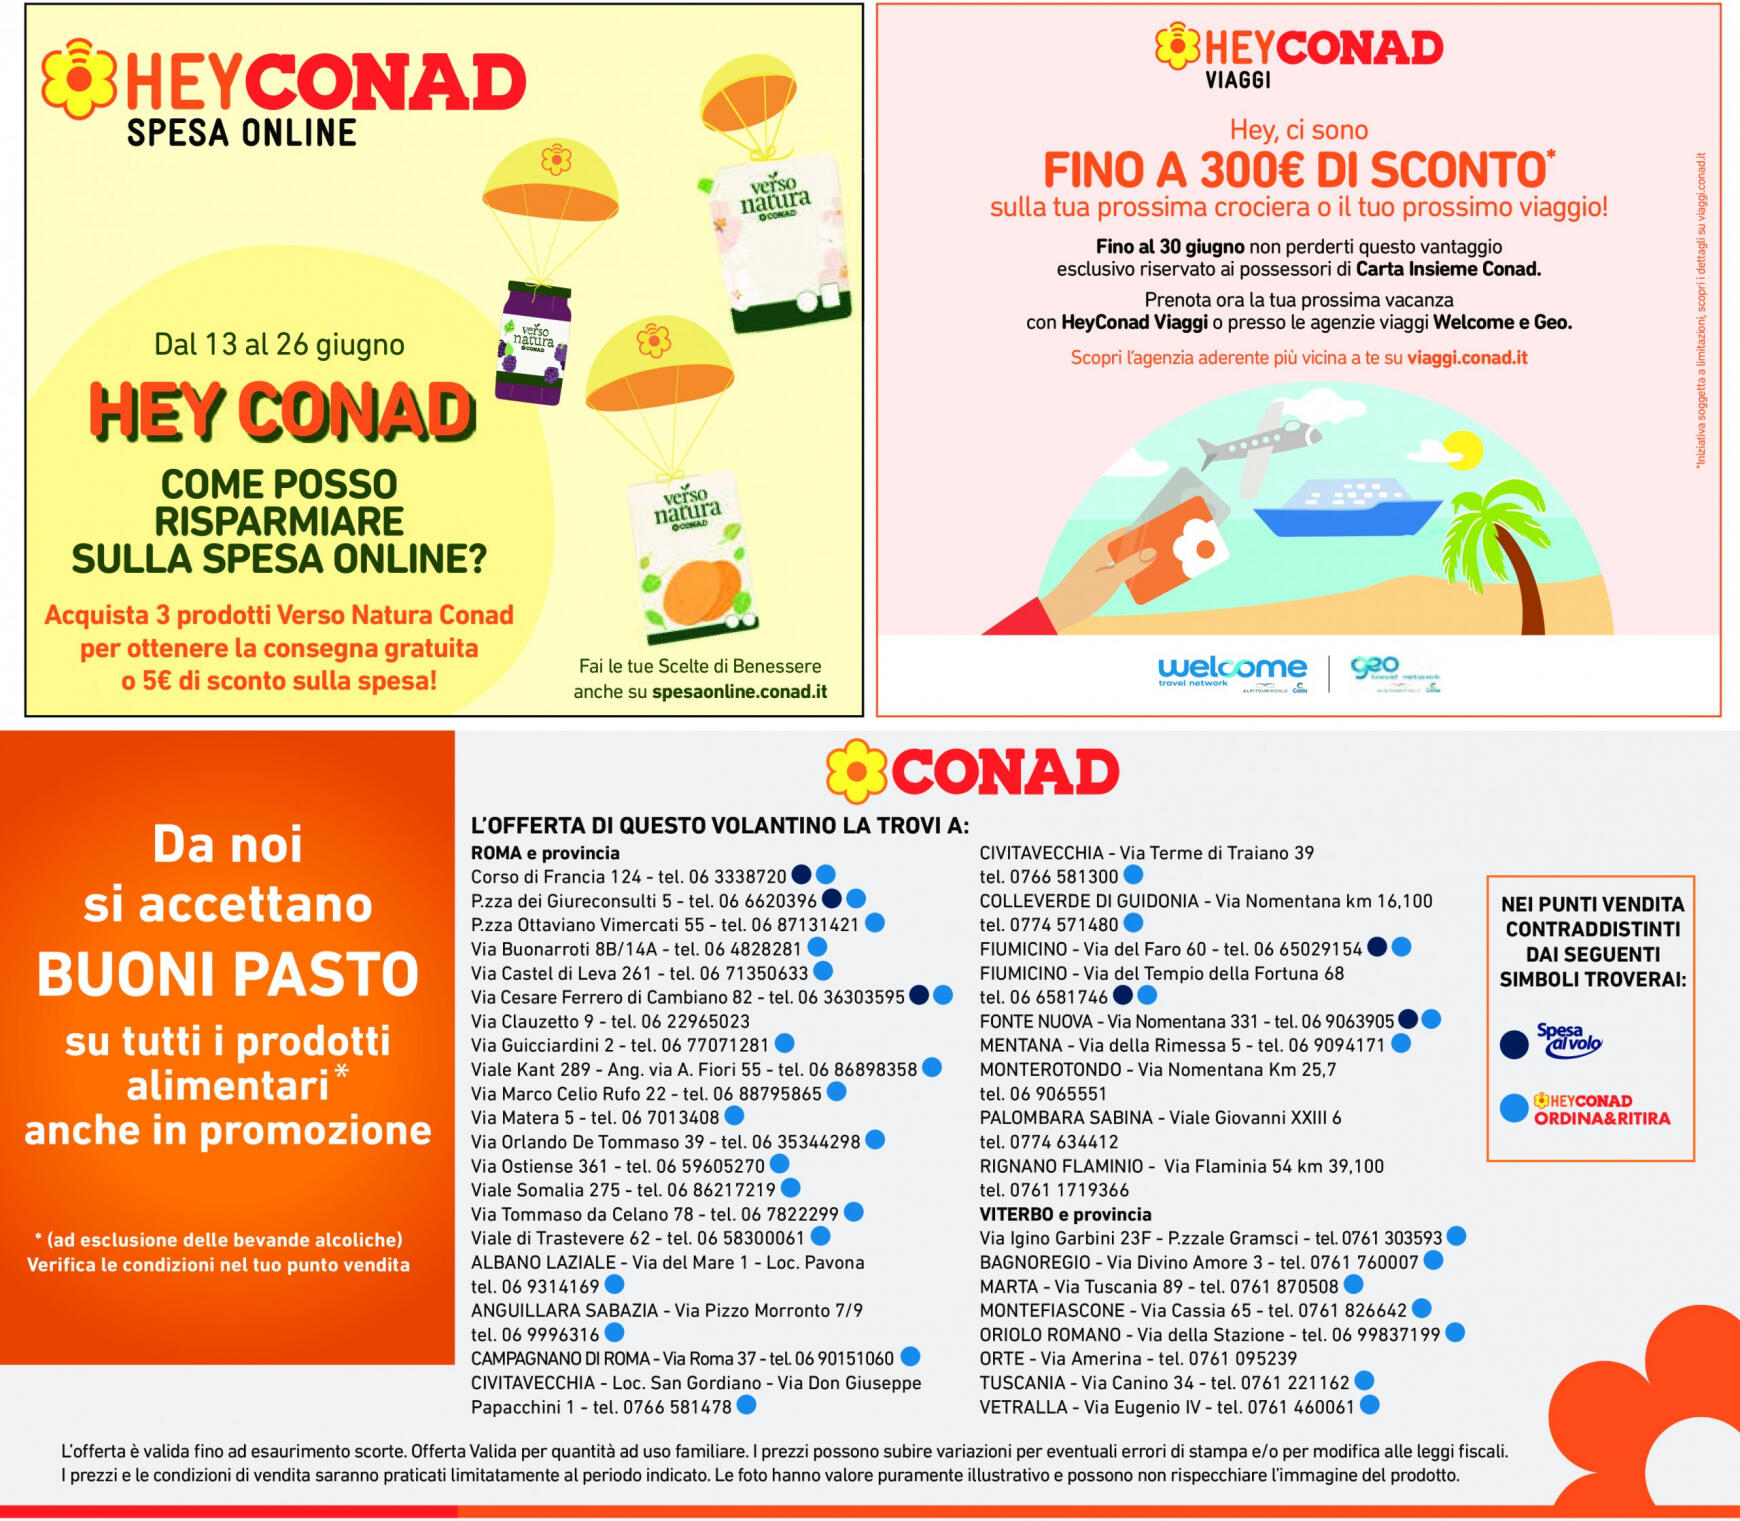 conad - Nuovo volantino Conad 12.06. - 25.06. - page: 27